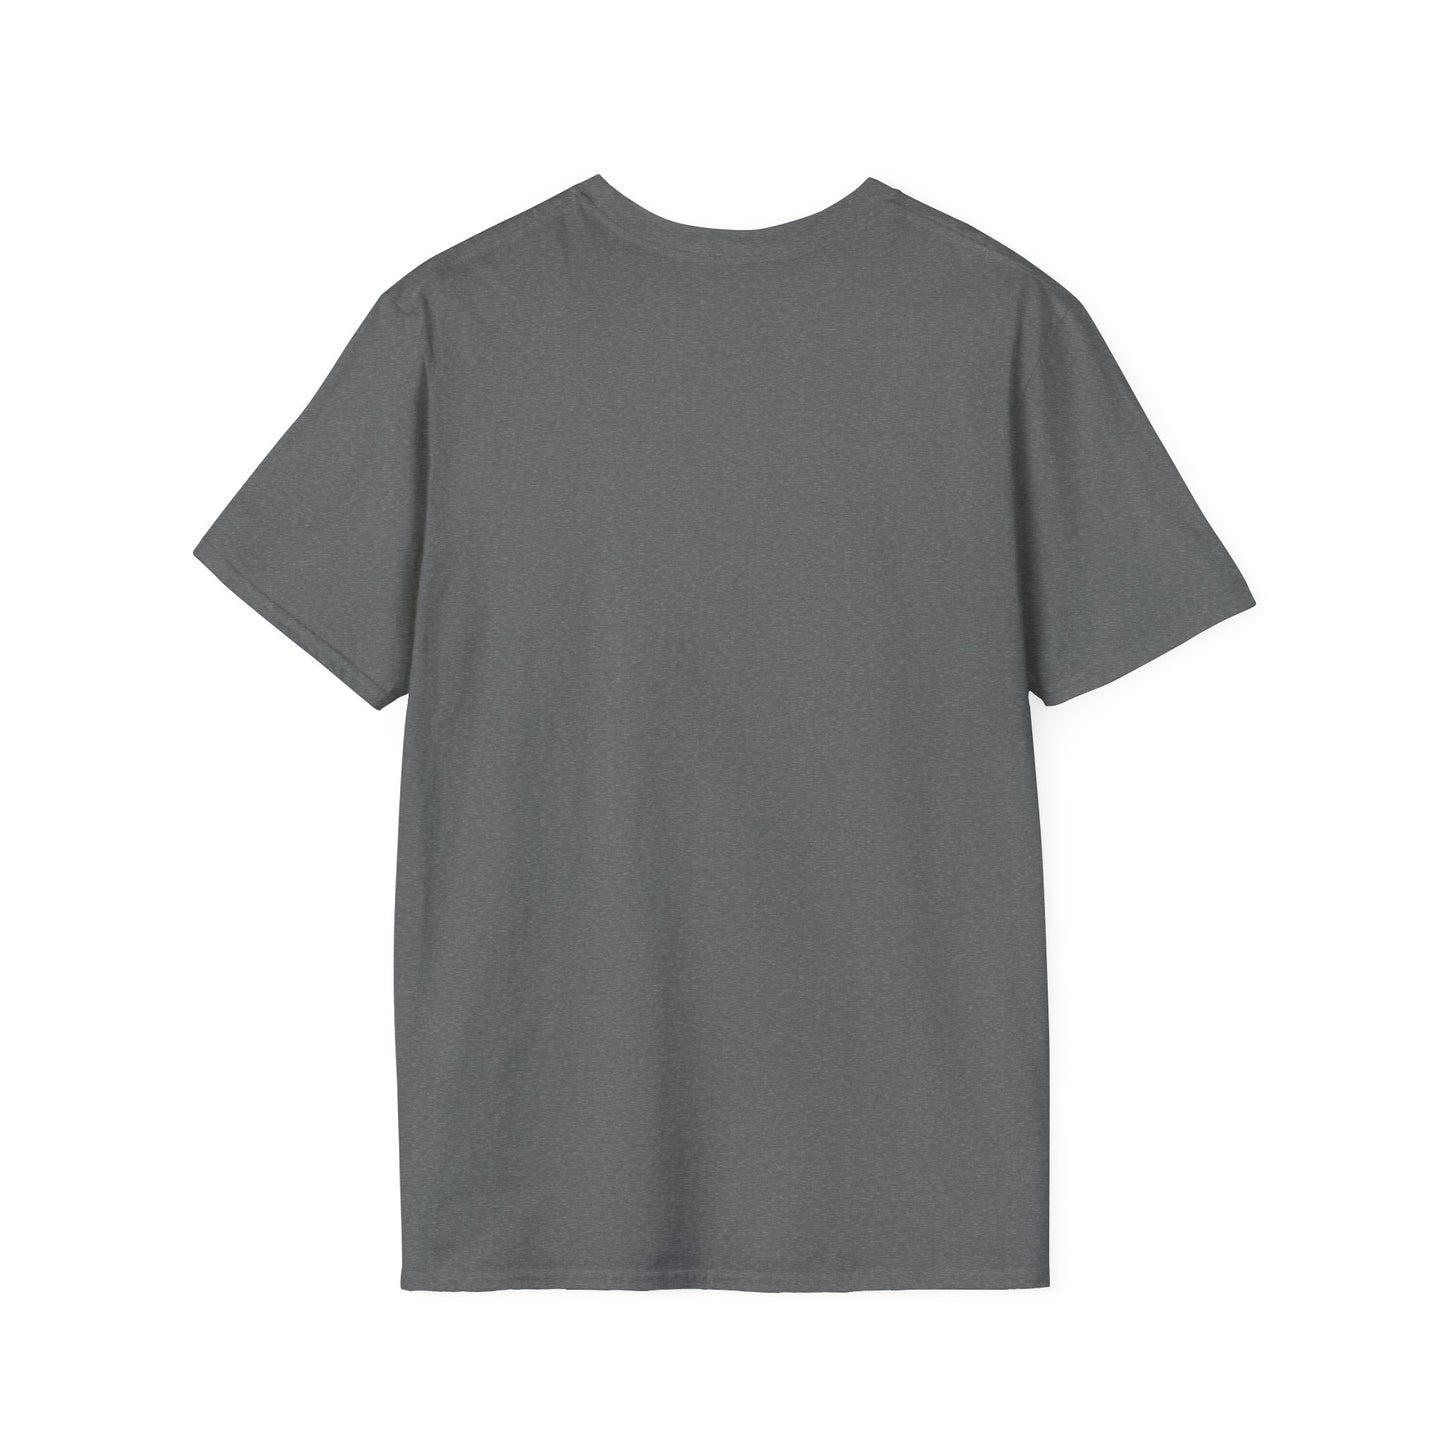 Powered by Ramen White Unisex Softstyle T-Shirt